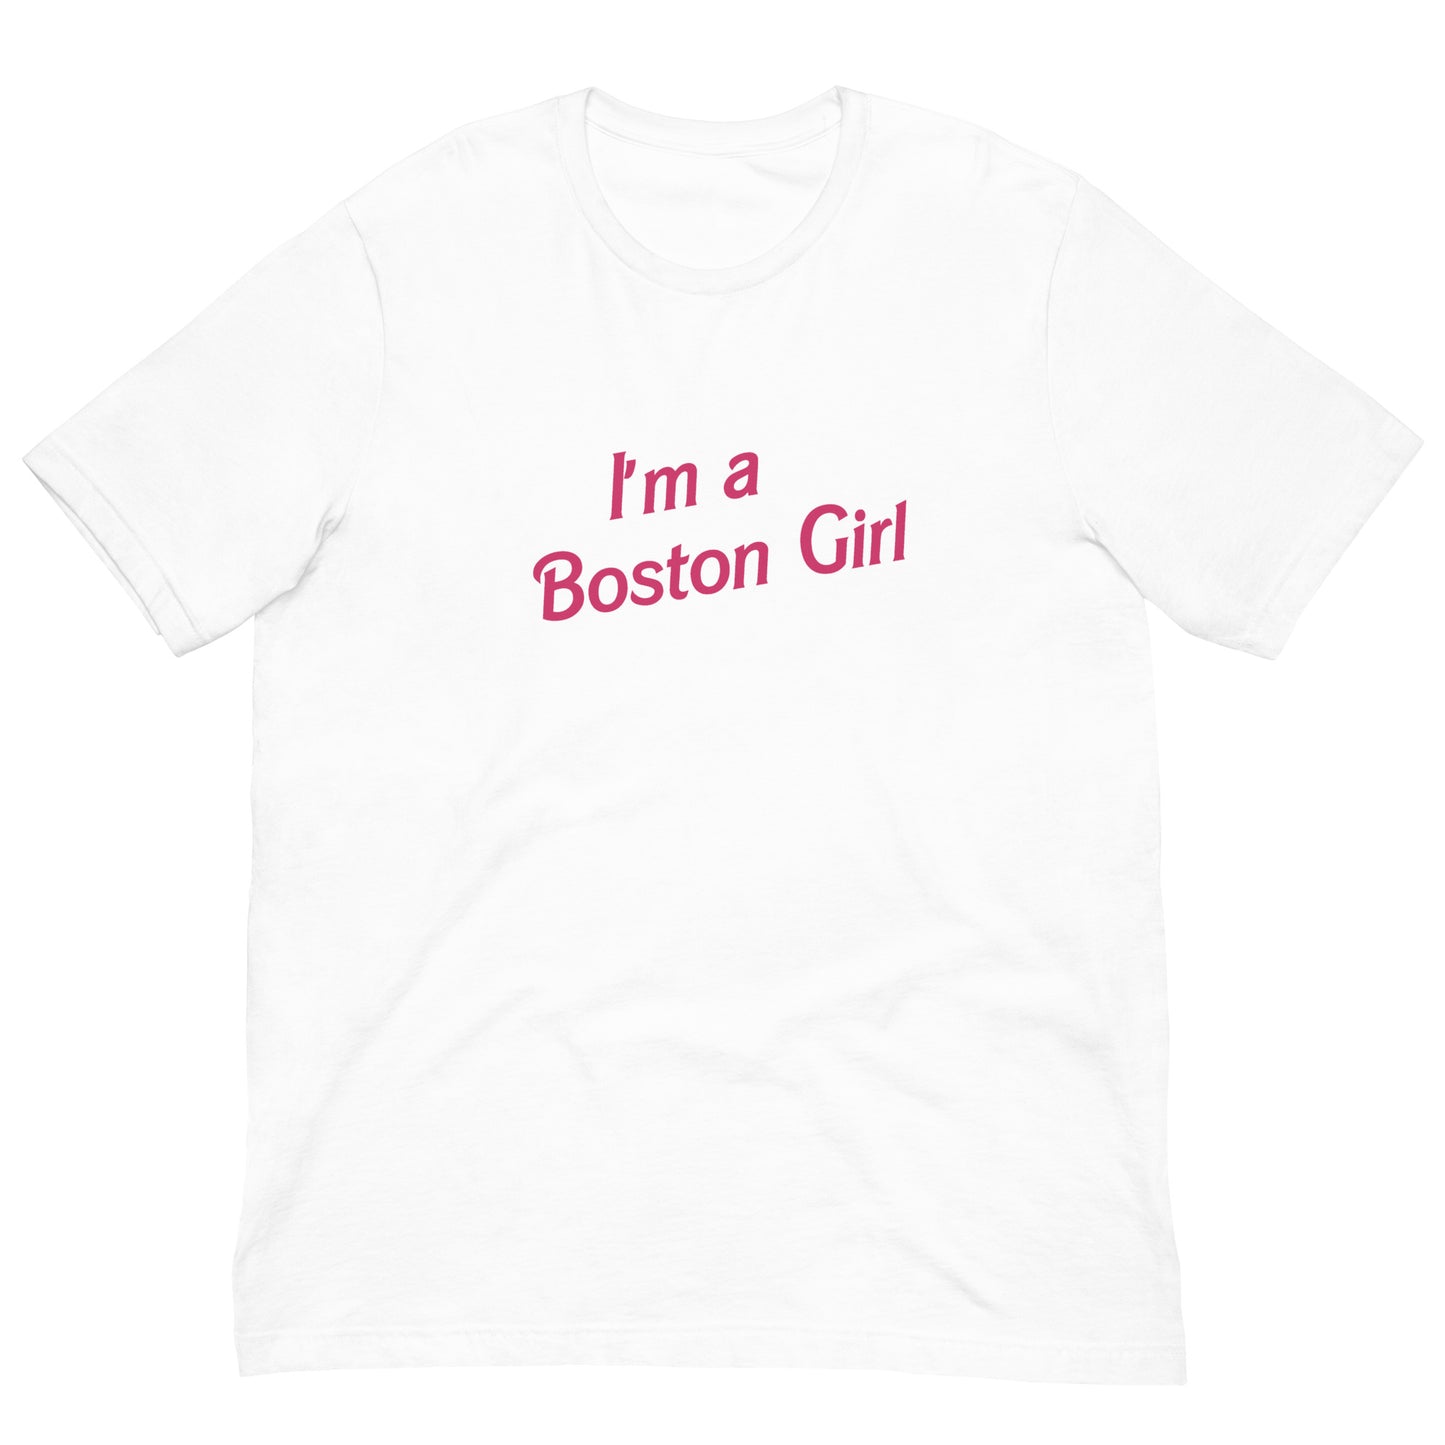 I'm a Boston Girl T-Shirt